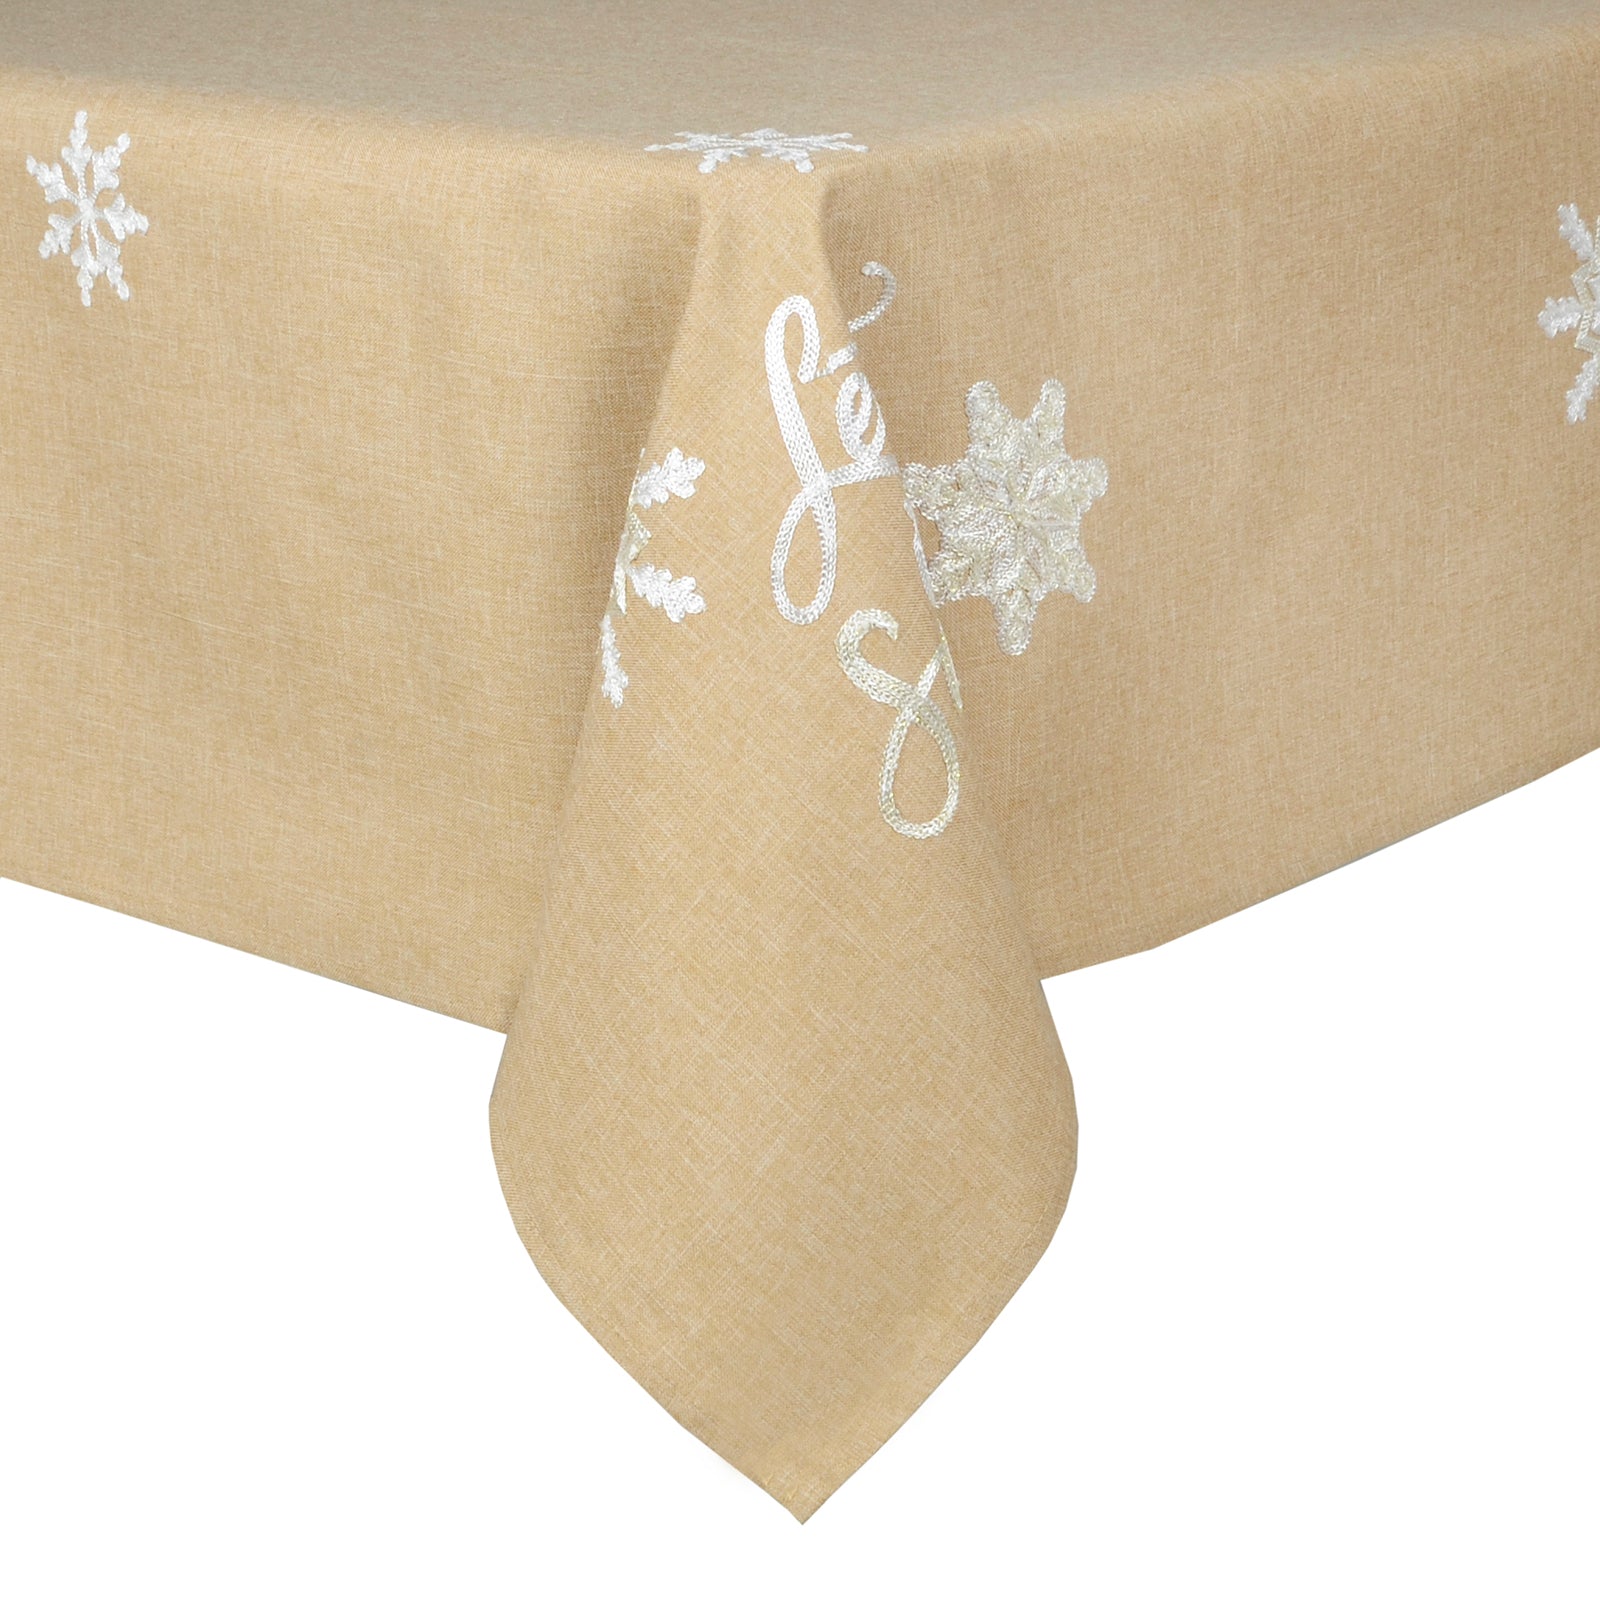 Mr Crimbo Let it Snow Embroidered Tablecloth/Napkin - MrCrimbo.co.uk -XS5870 - Biscuit -christmas napkins